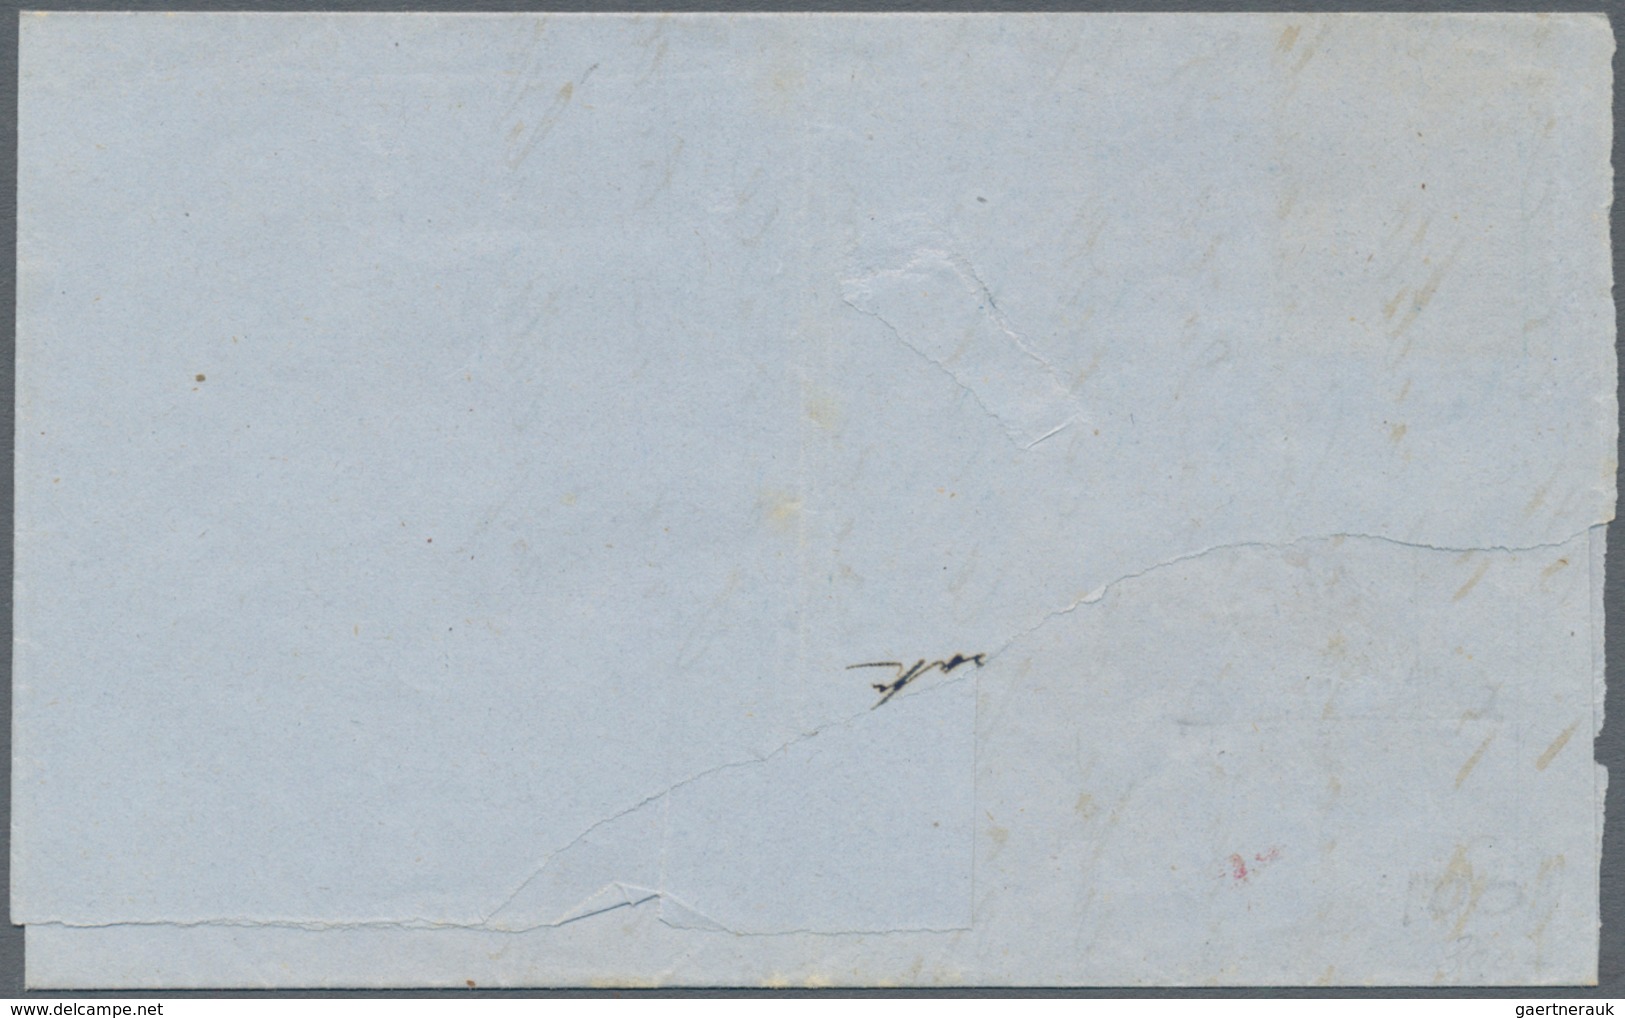 00867 Italien - Altitalienische Staaten: Sizilien: 1859, 2 Grana Ultramarin, First Plate, On A Letter Addr - Sizilien